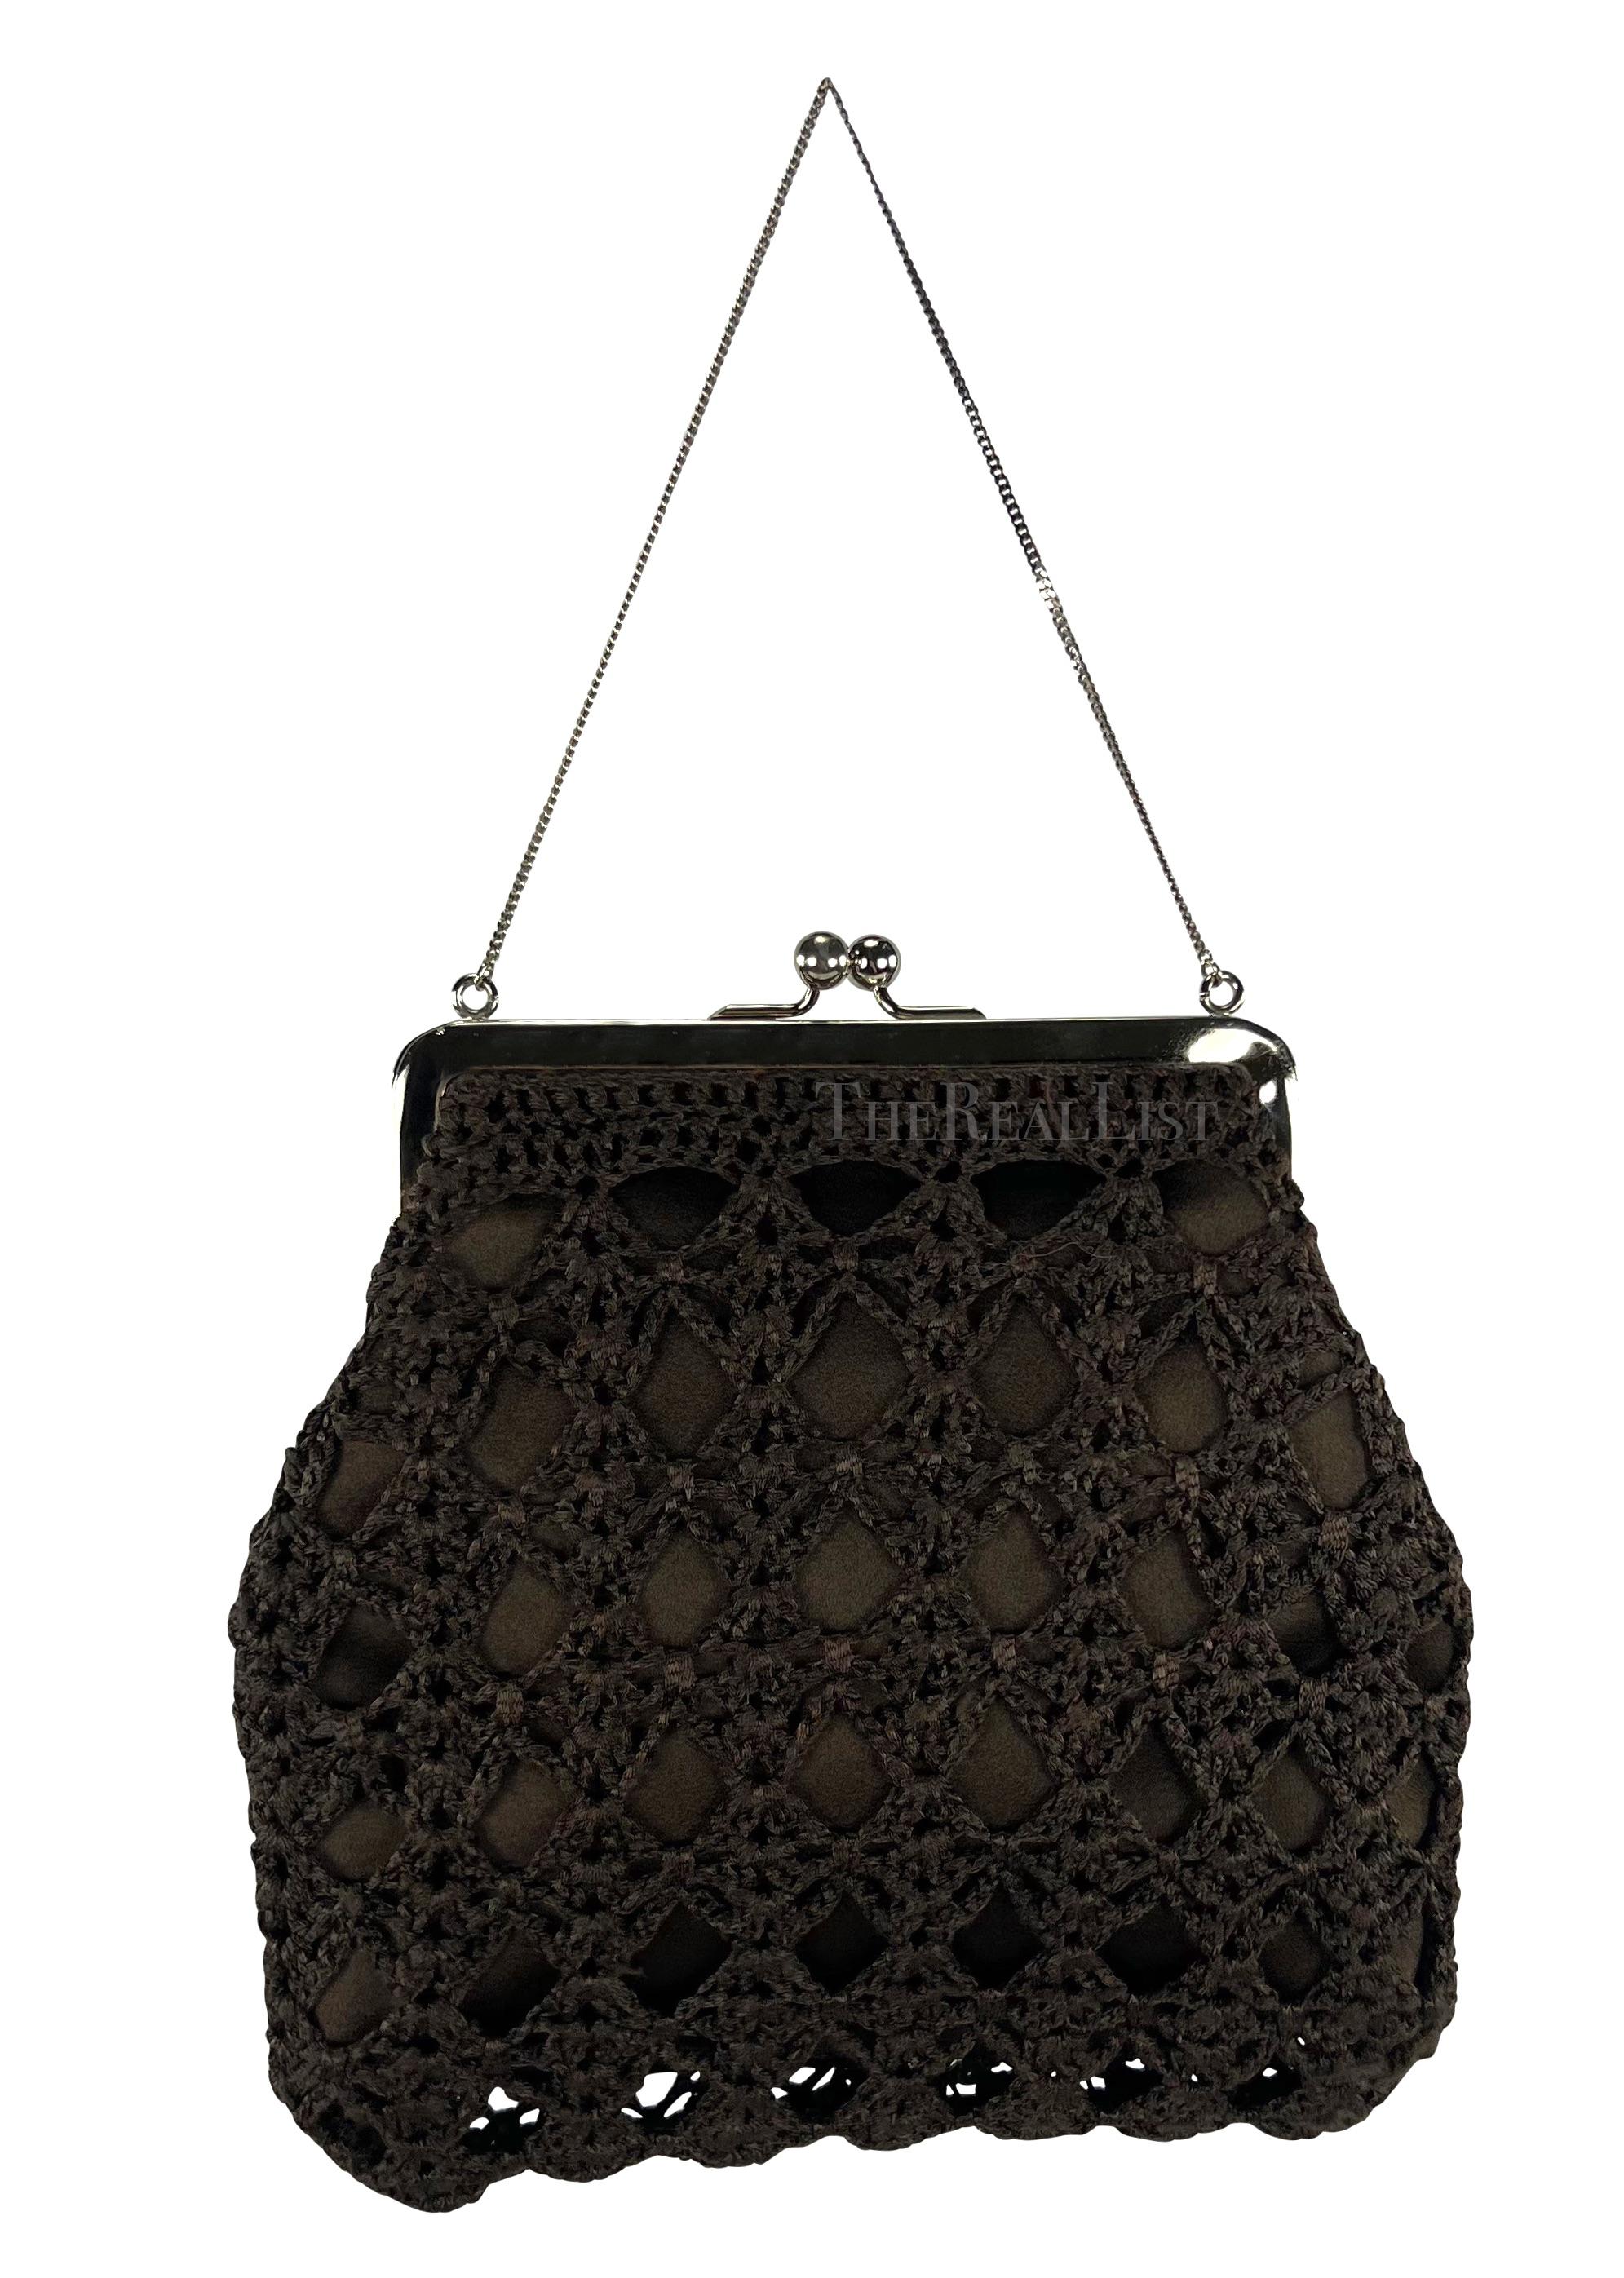 S/S 1997 Dolce & Gabbana Bown Crochet Clam Closure Mini Evening Bag For Sale 2